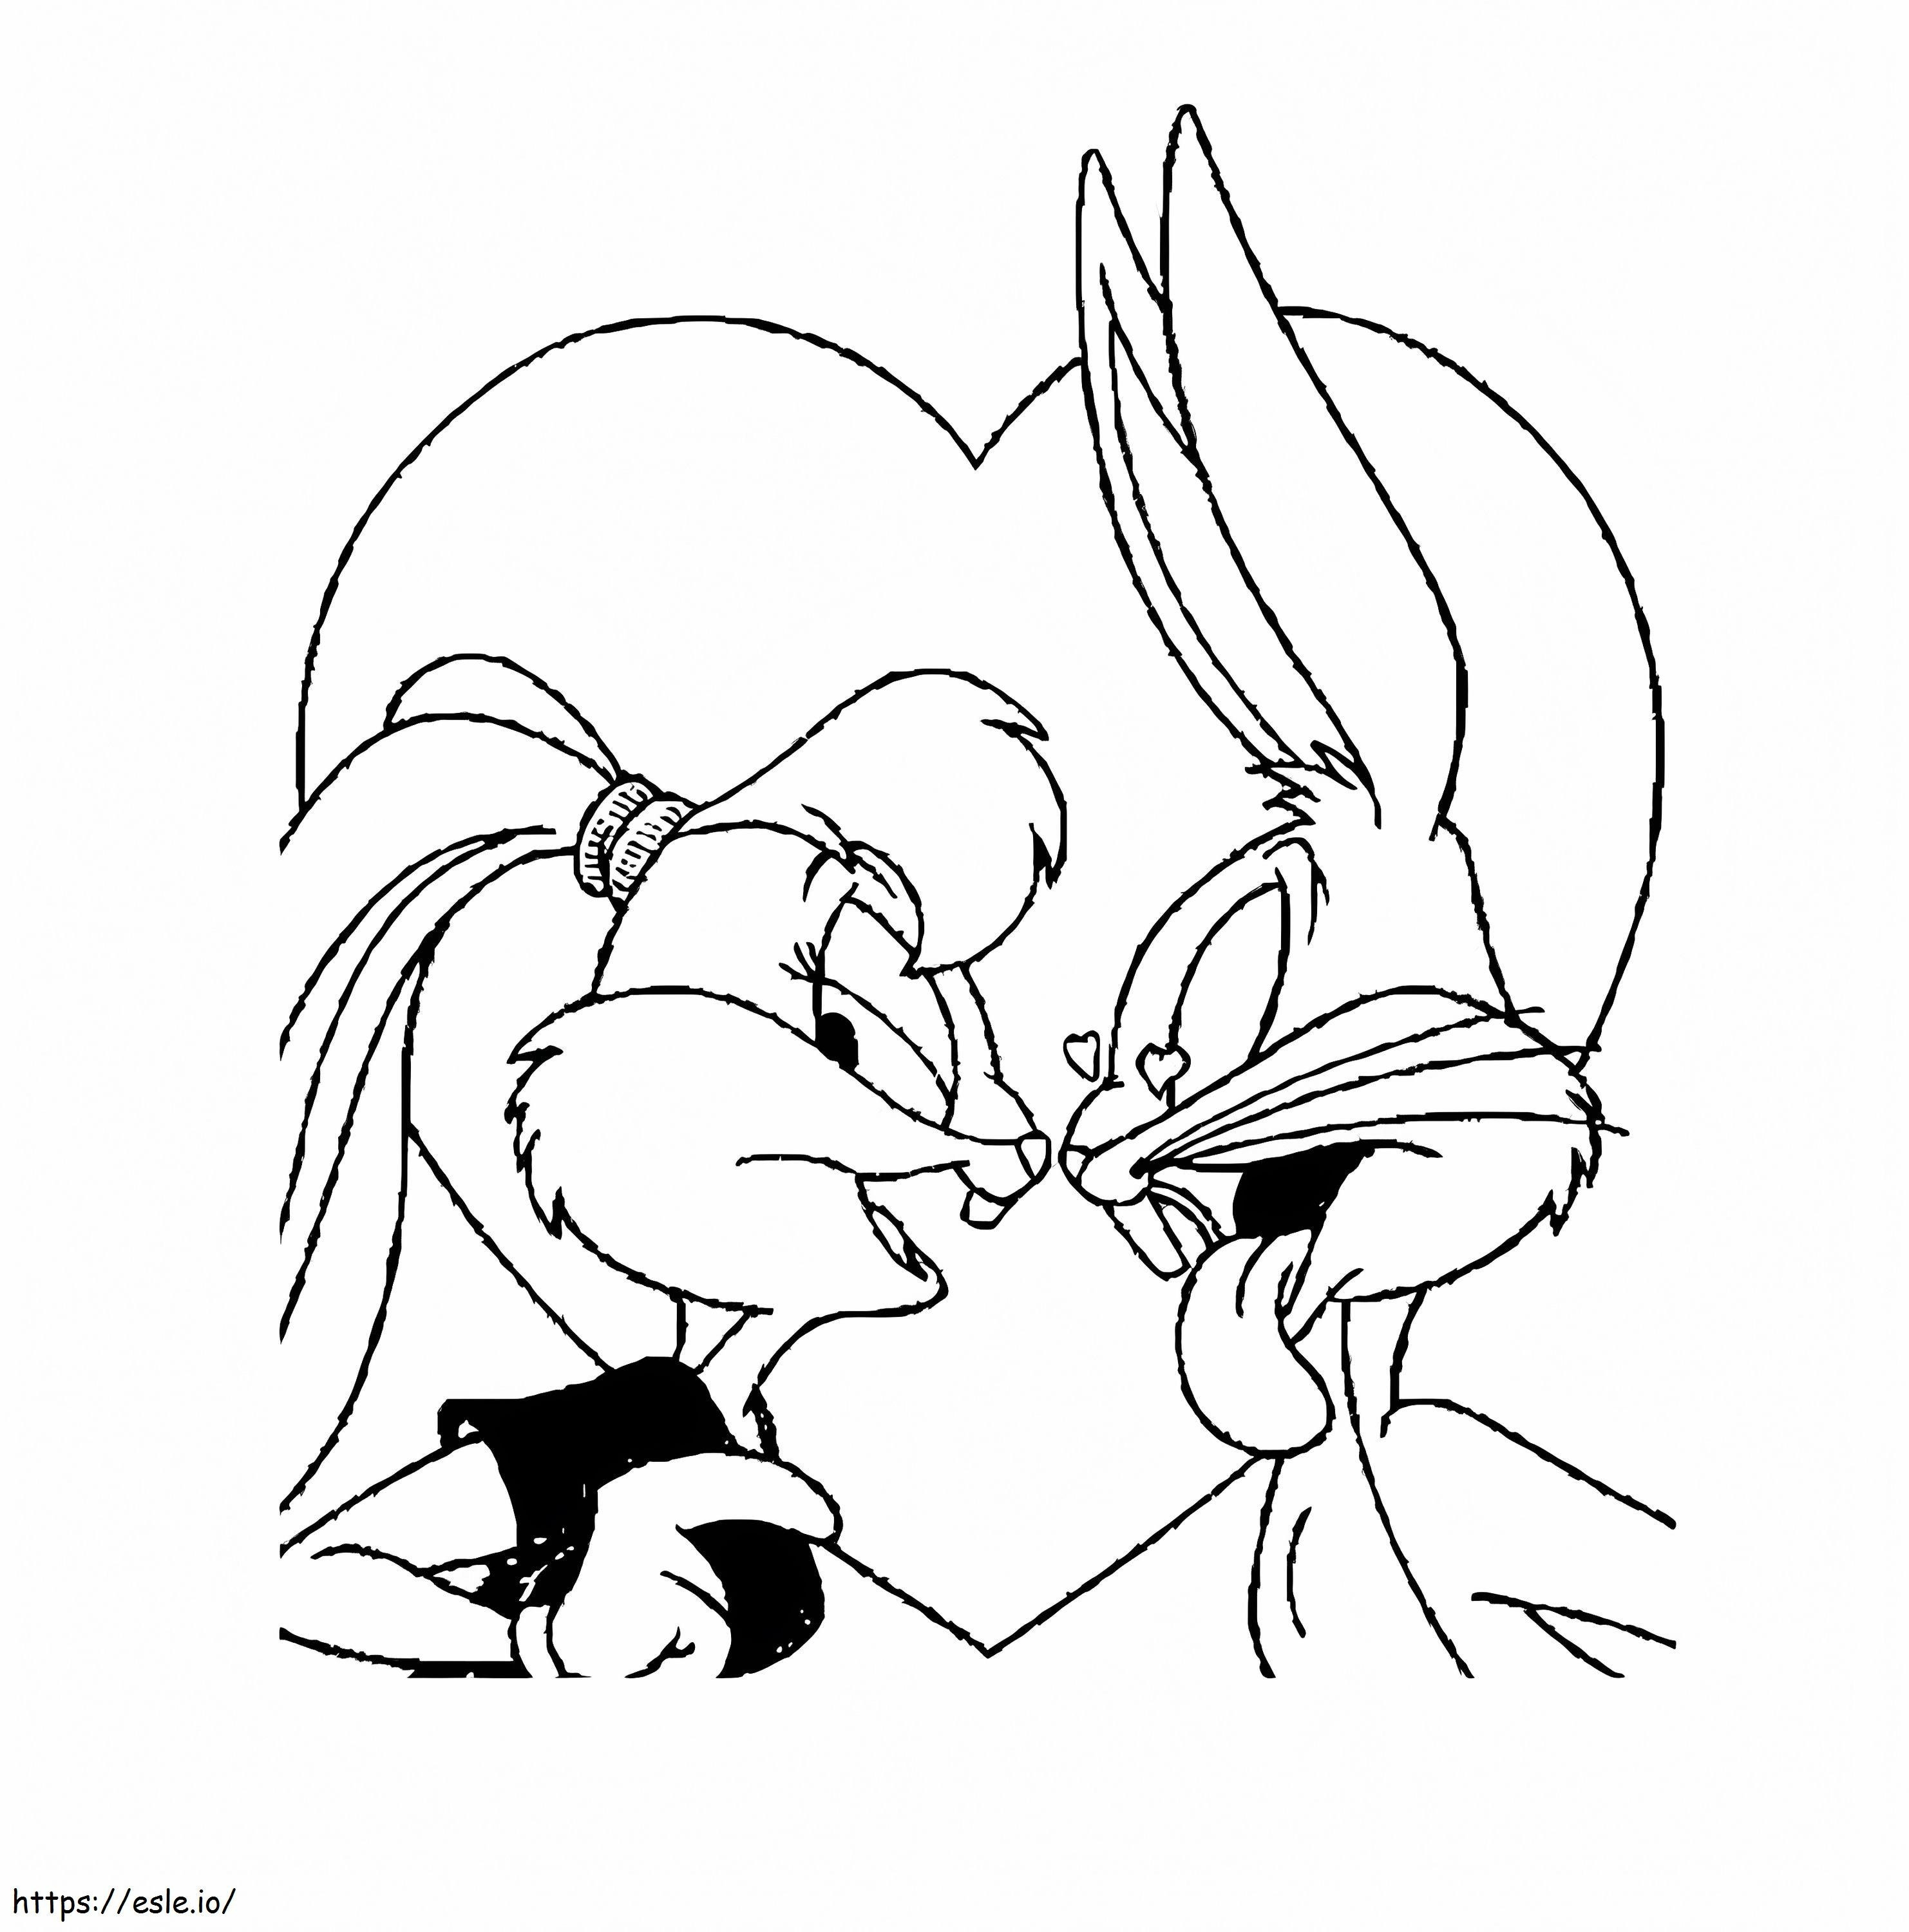 Bugs Bunny ve Lola Amor boyama